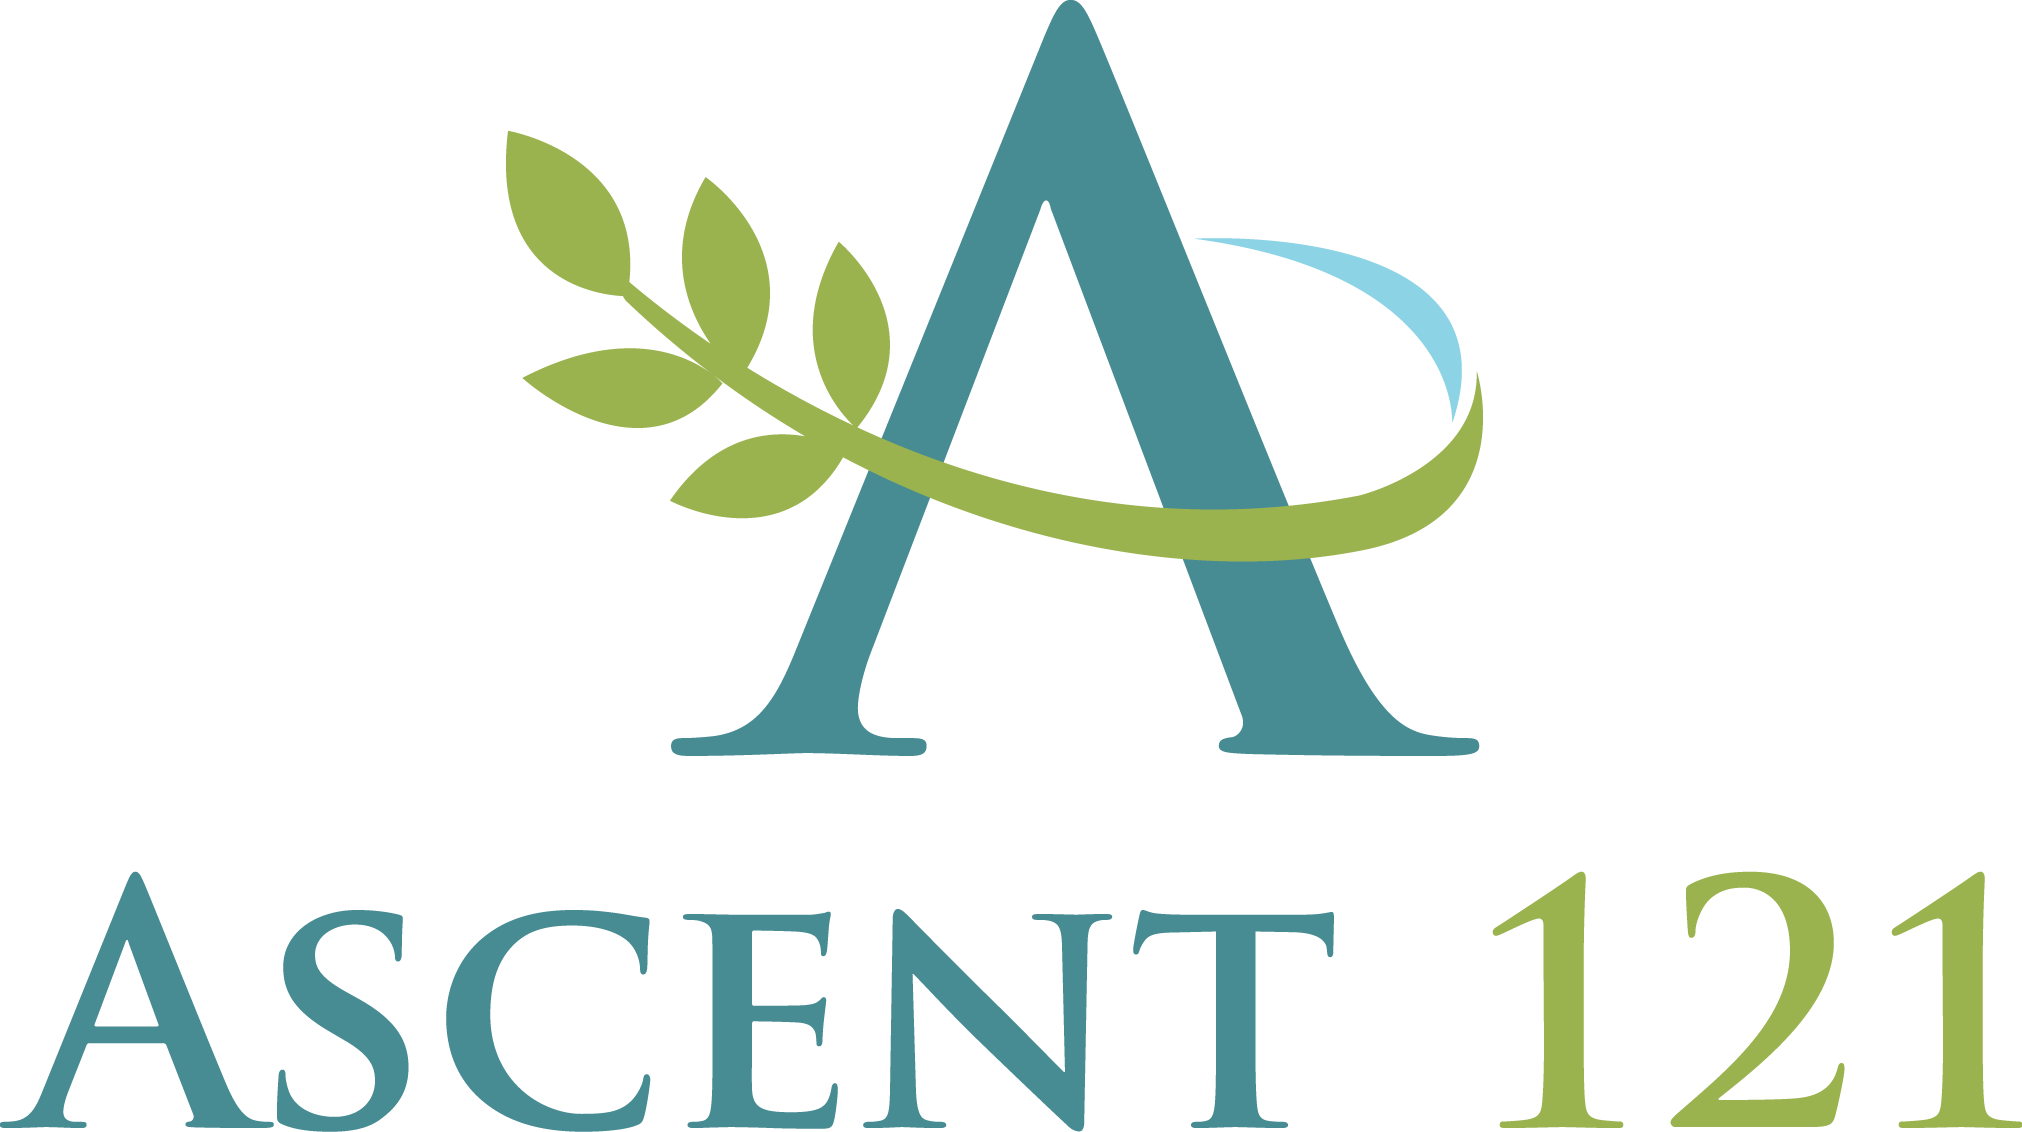 Ascent 121 Logo 2